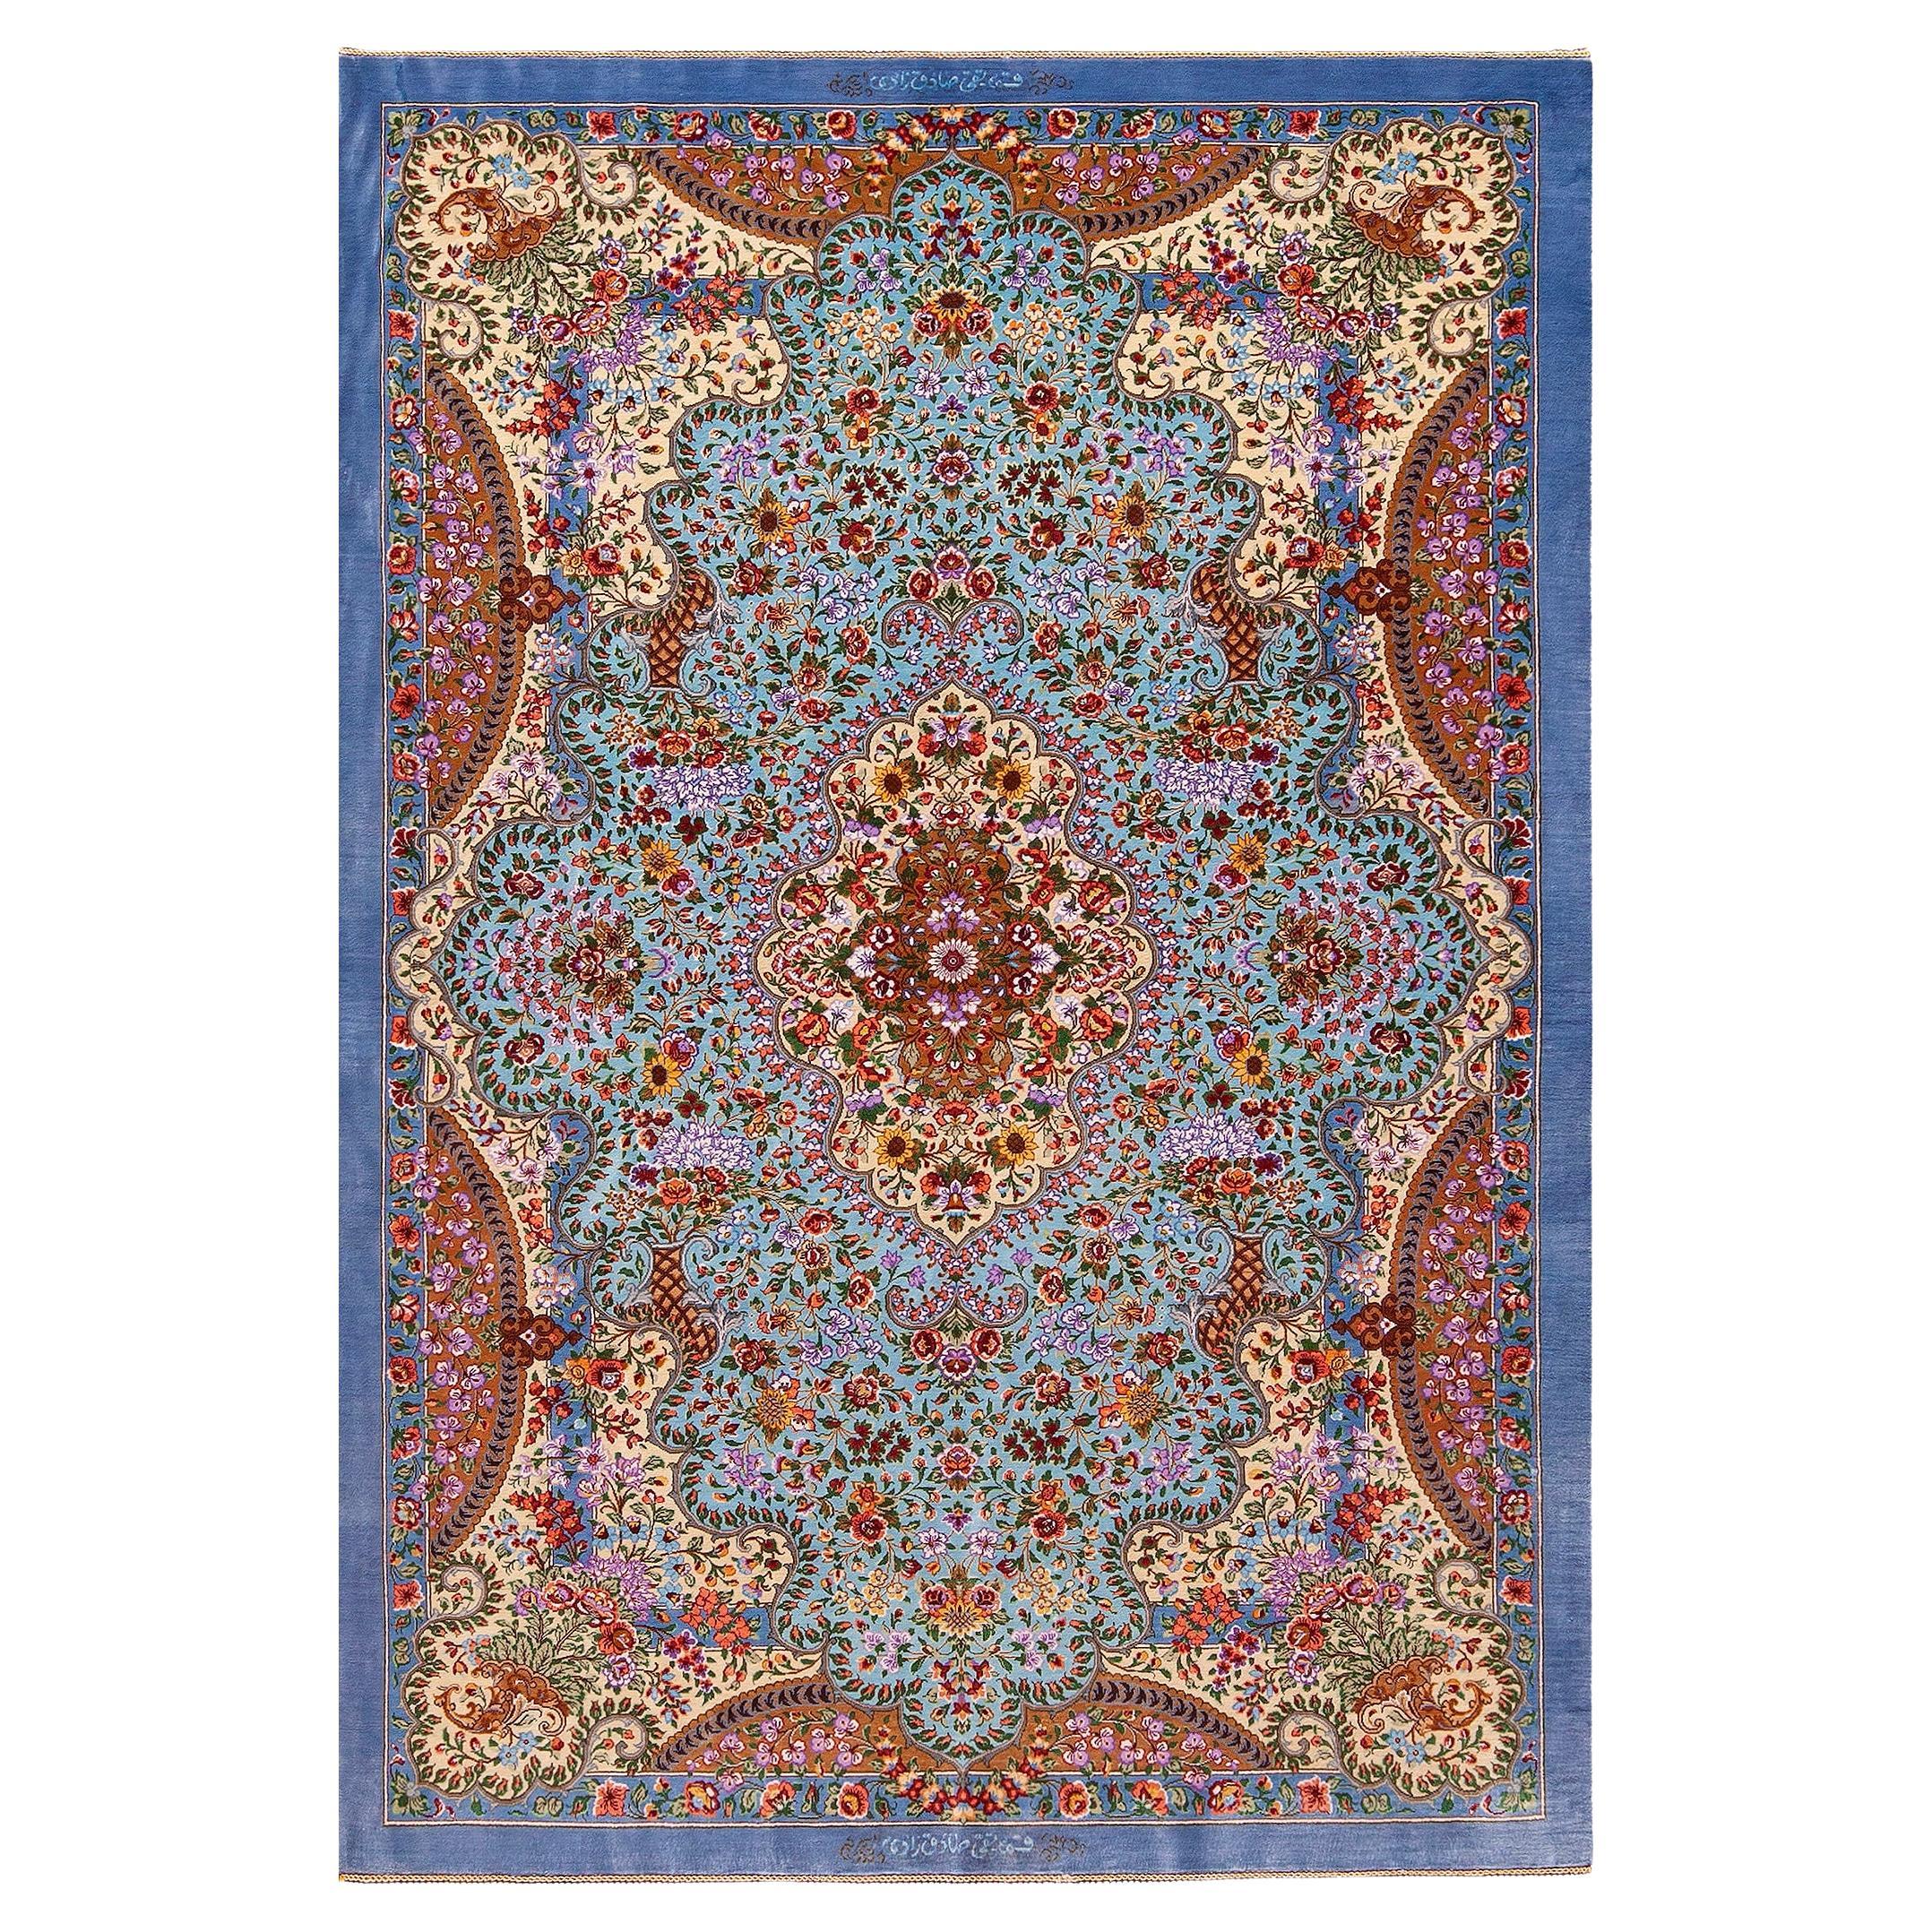 Amazing Small Fine Floral Luxurious Vintage Persian Silk Qum Rug 3'6" x 5'2"